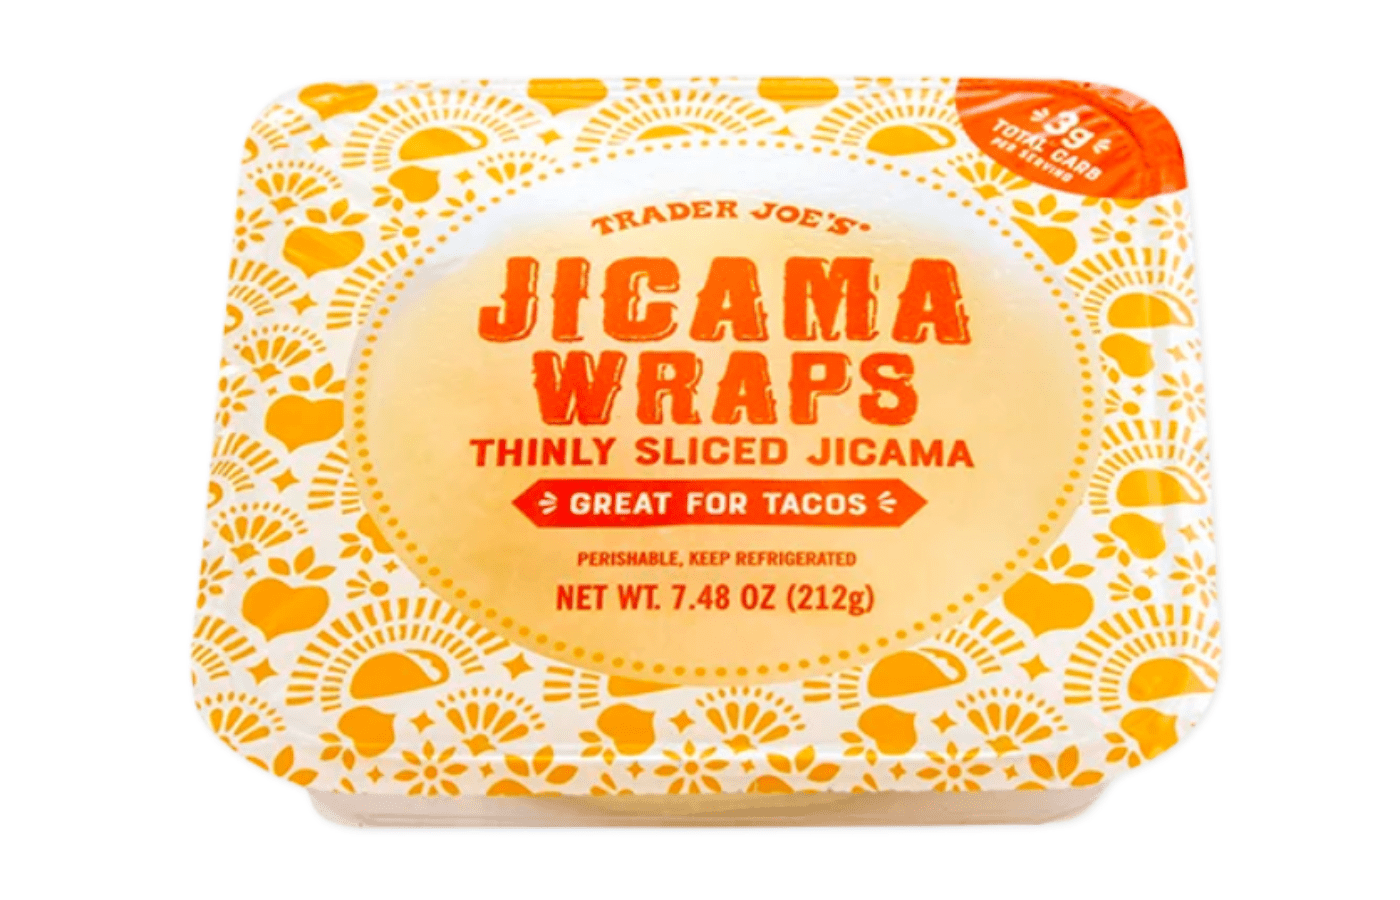 How to Store Trader Joe's Jicama Wraps